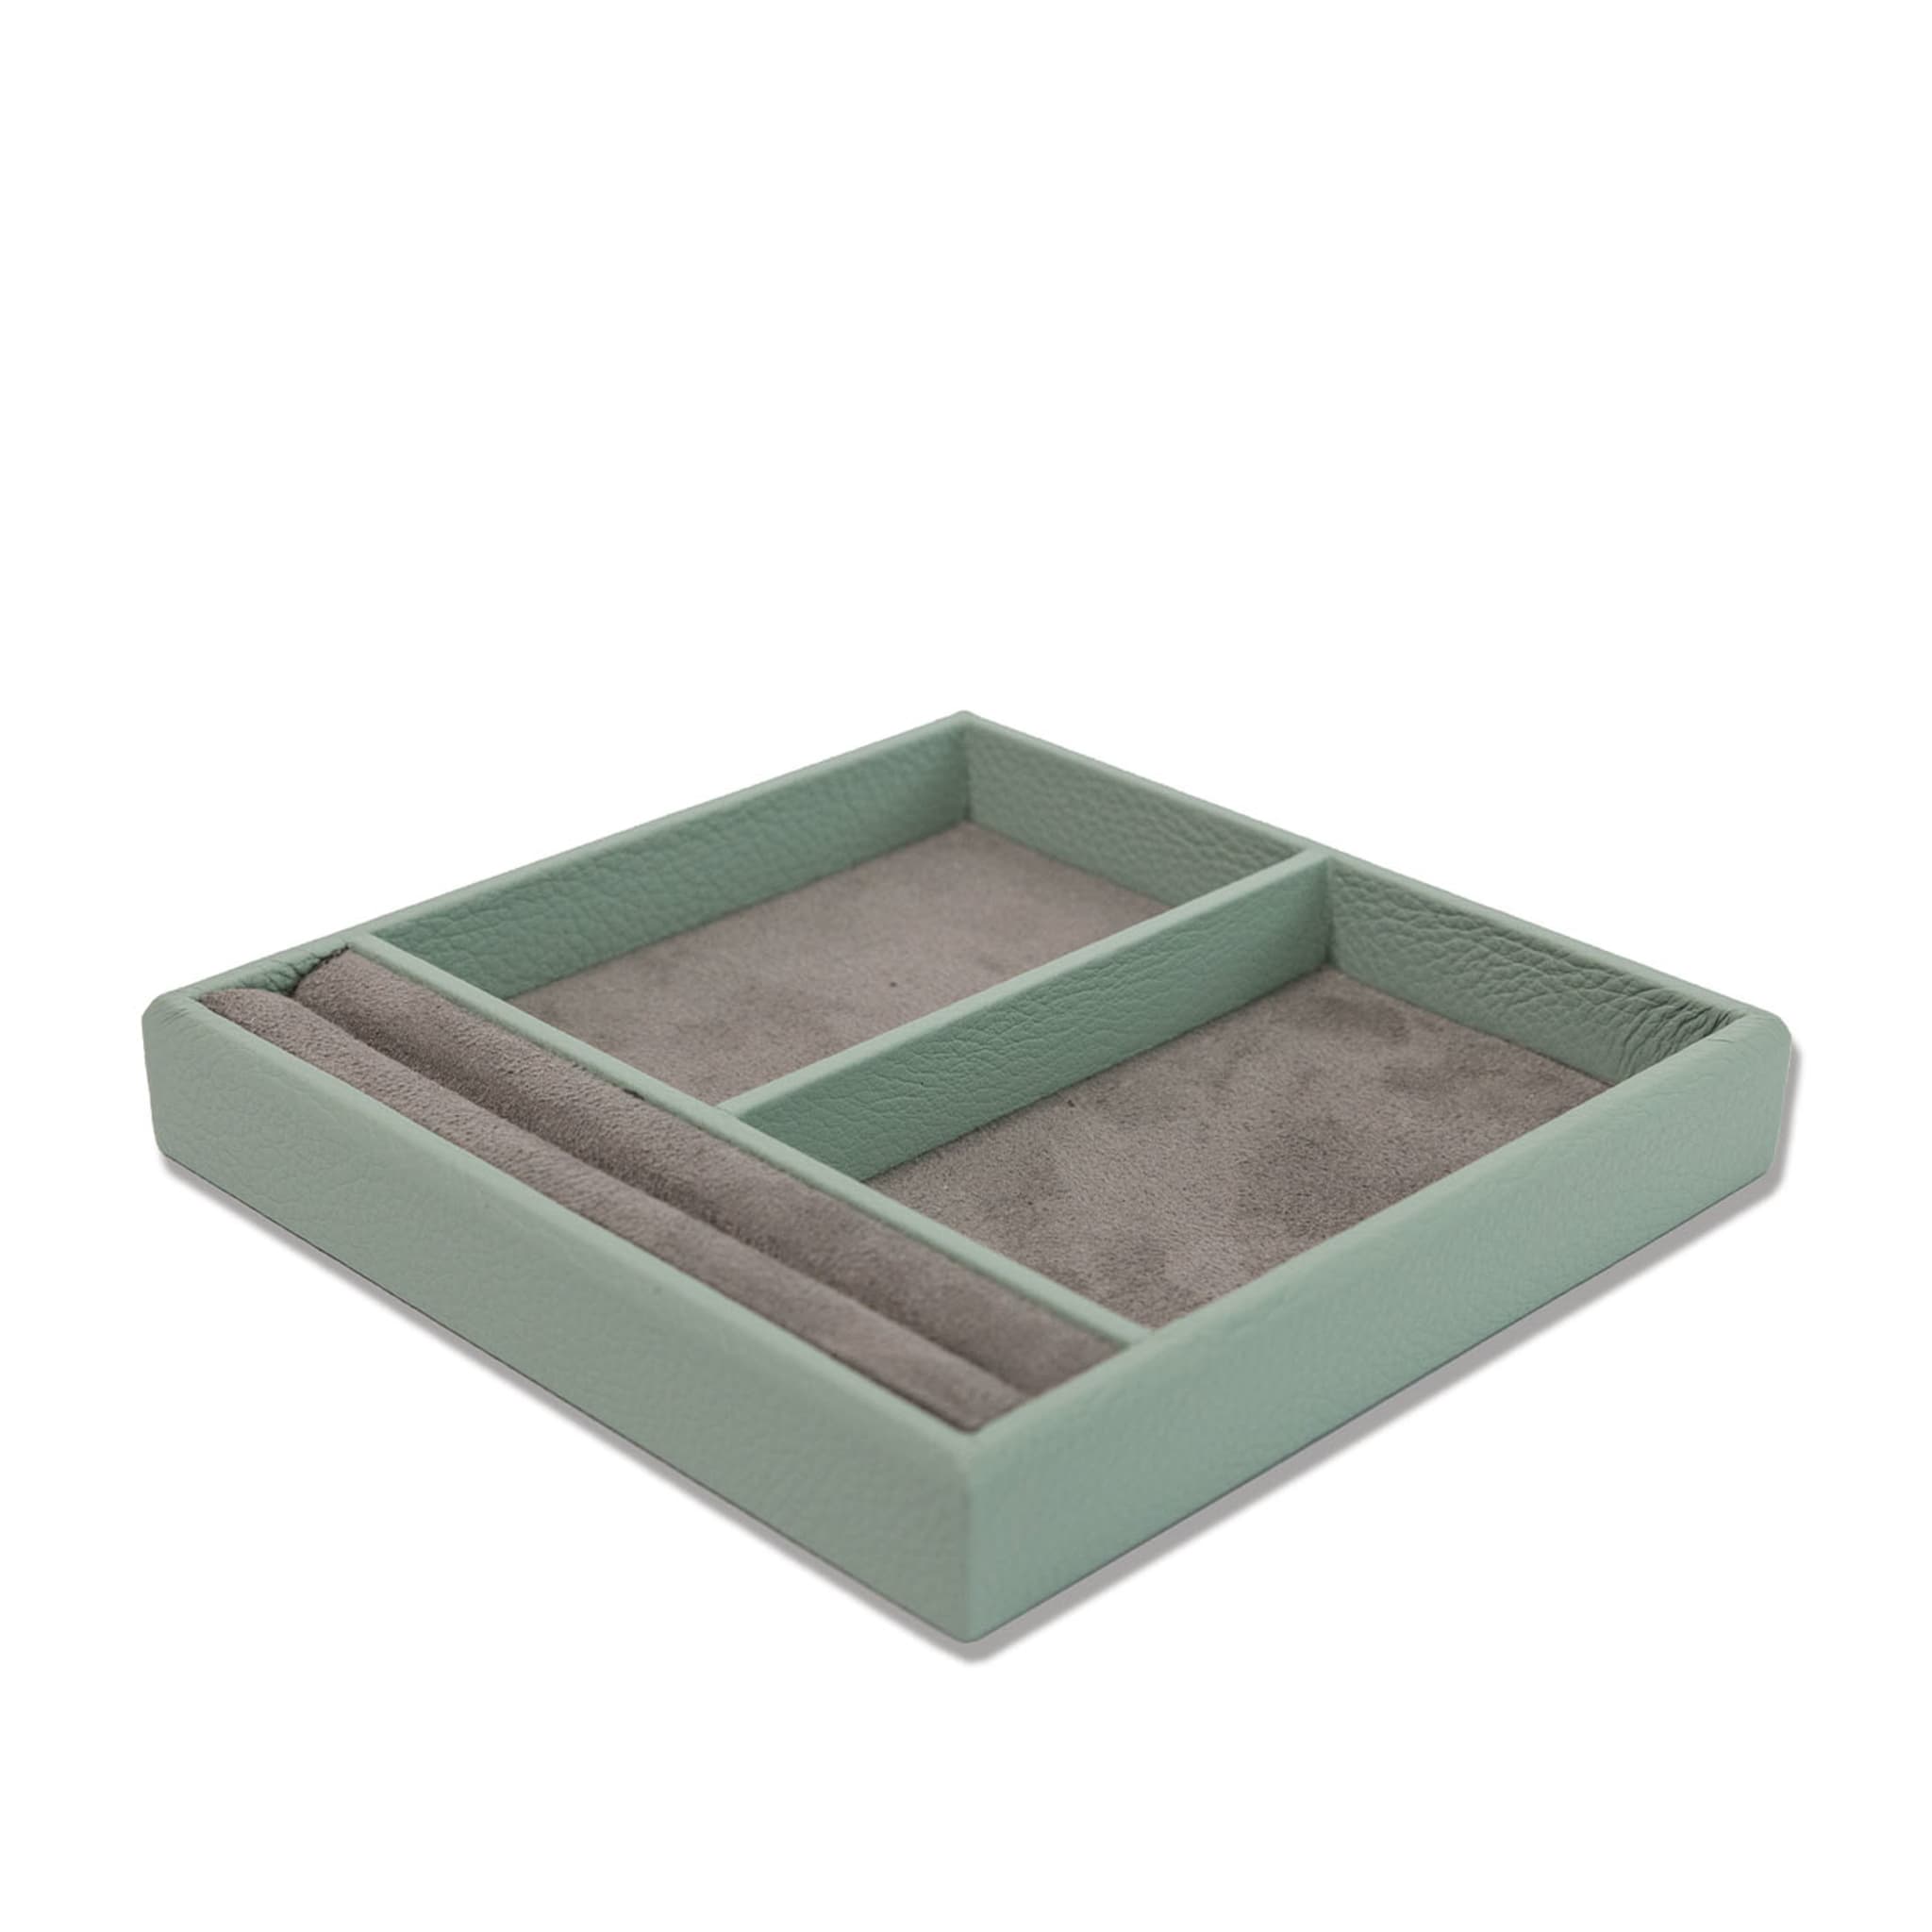 Safety Box Smeralda Green Small Tray  - Alternative view 1